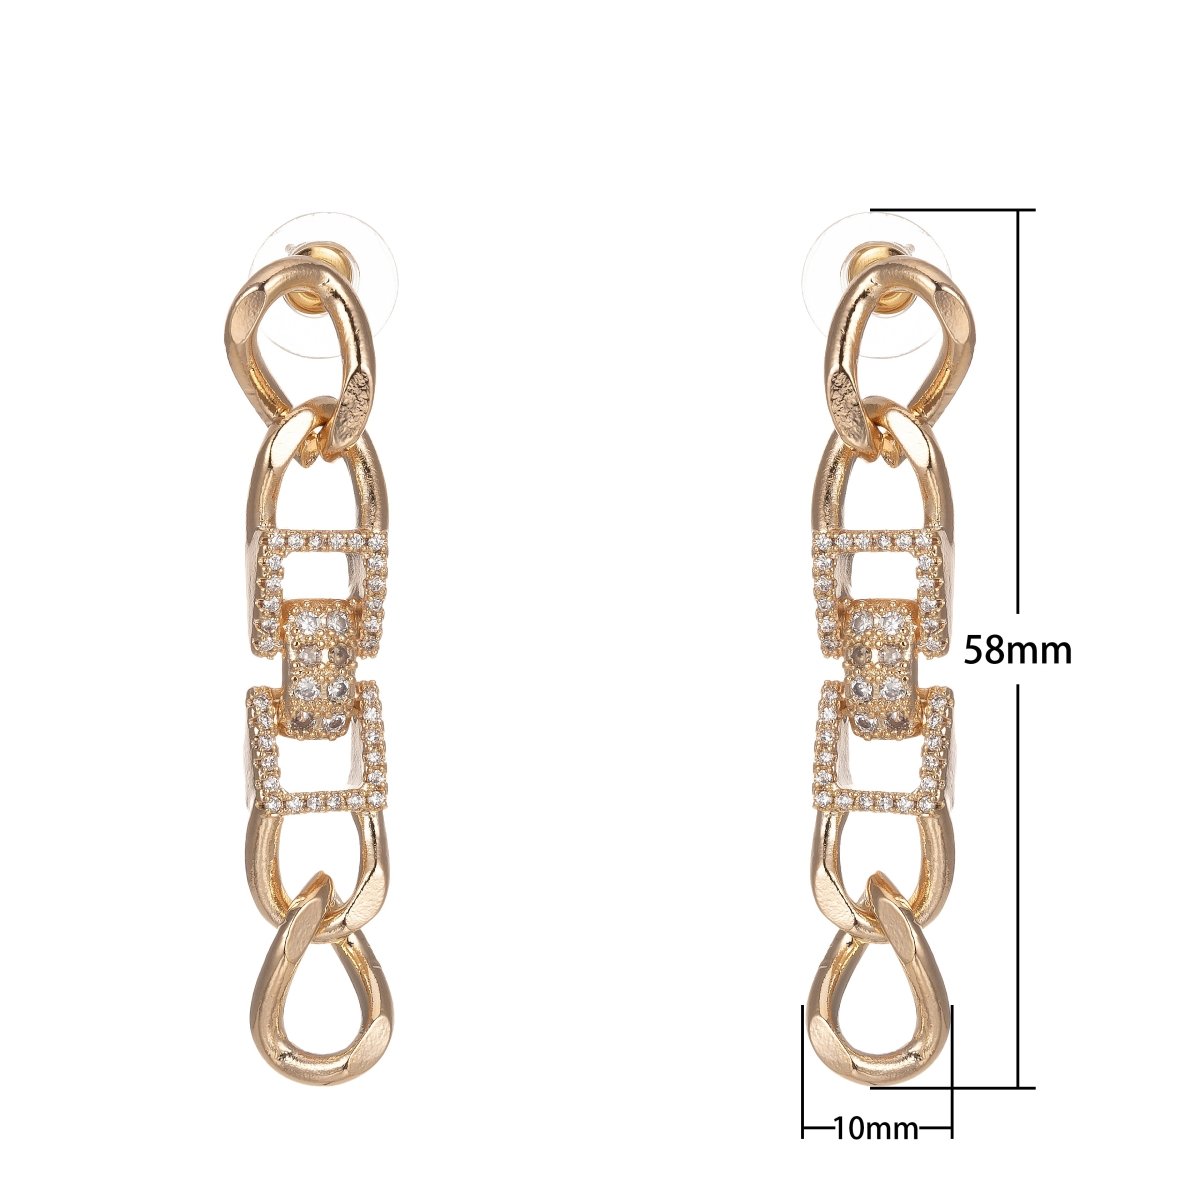 Curb Link Earrings Curb Chain Link Earring • Minimalist Gold Earring Dangle Stud Earring T-020 - DLUXCA